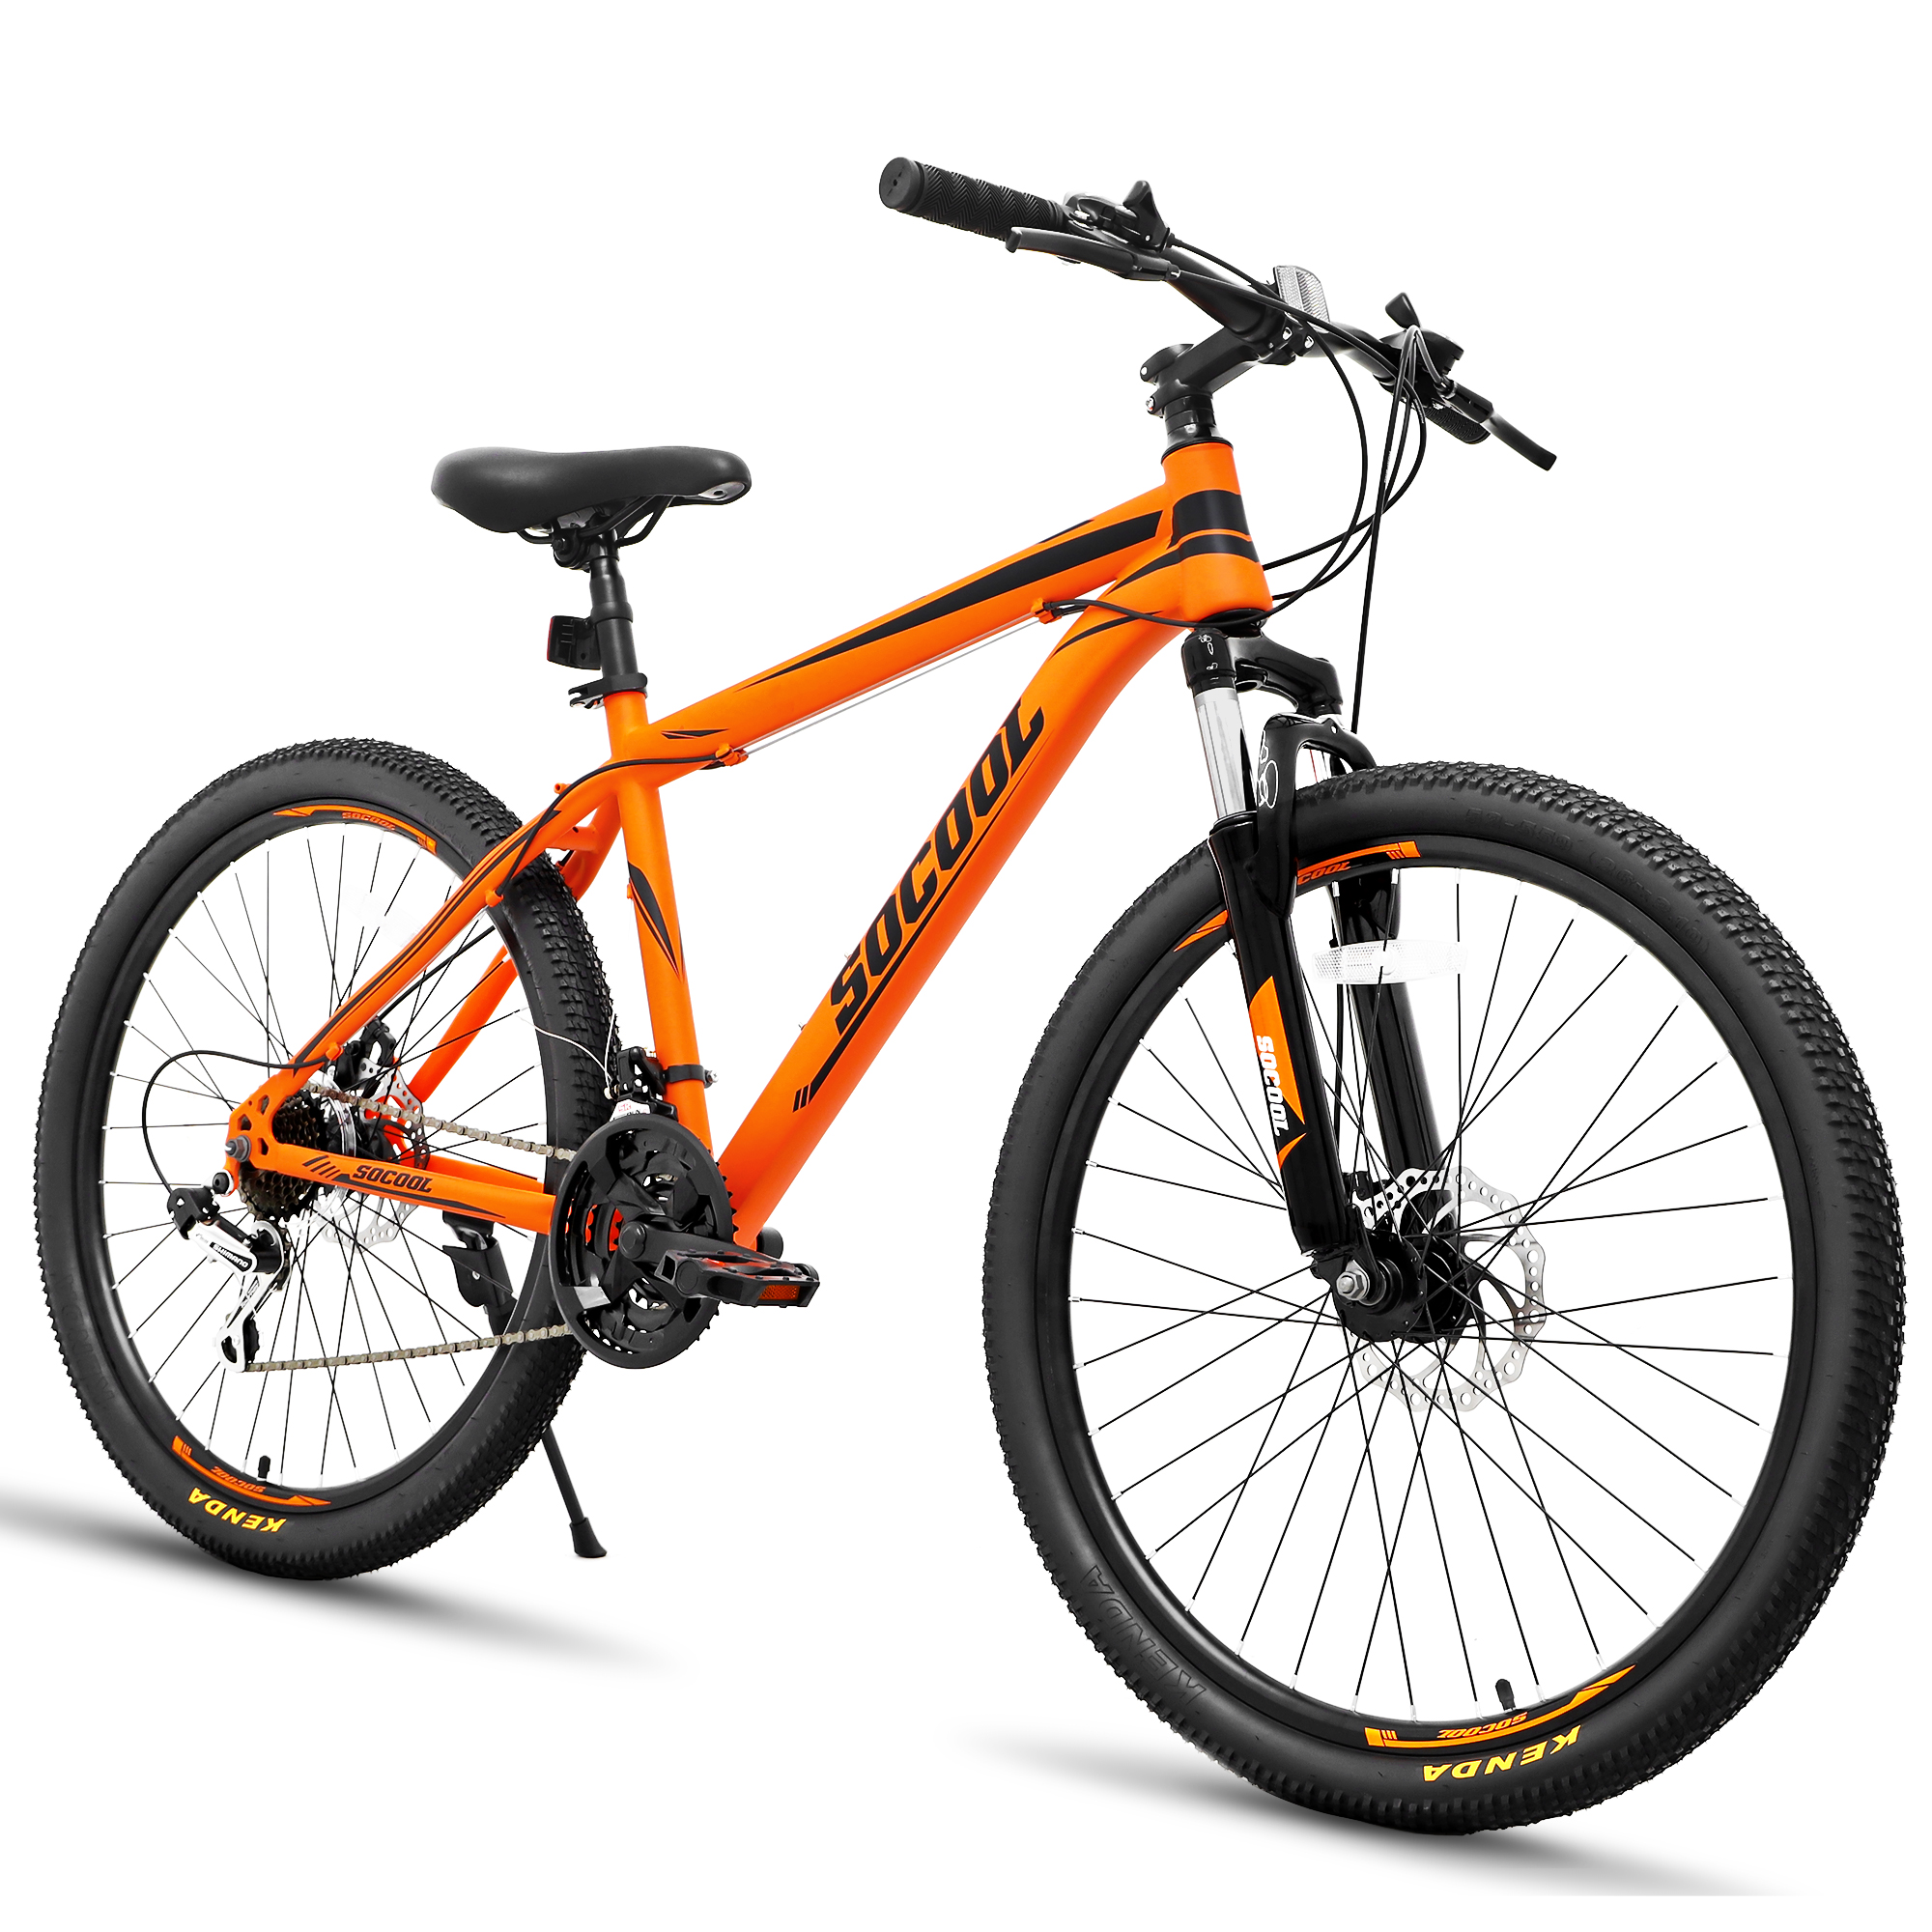 SOCOOL Mens and Womens Road Bike, 26-Inch Wheels, Lightweight Aluminum Frame -Orange & Black, ZA454BK - image 1 of 9